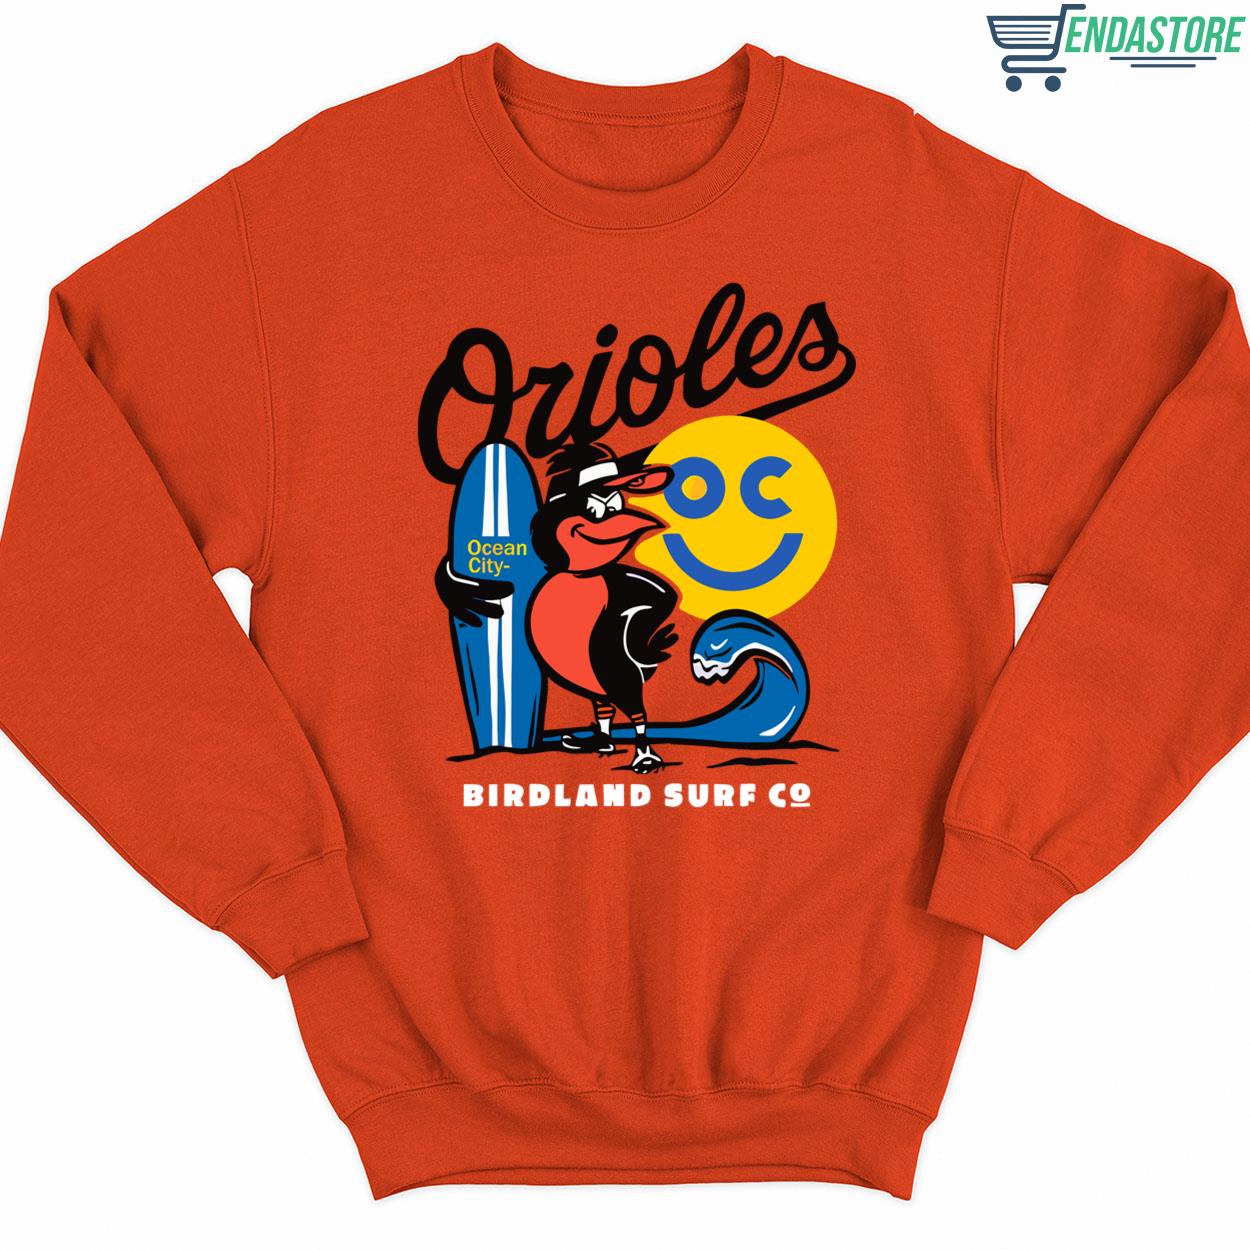 Endastore 2023 Baltimore Orioles Giveaway Sweatshirt